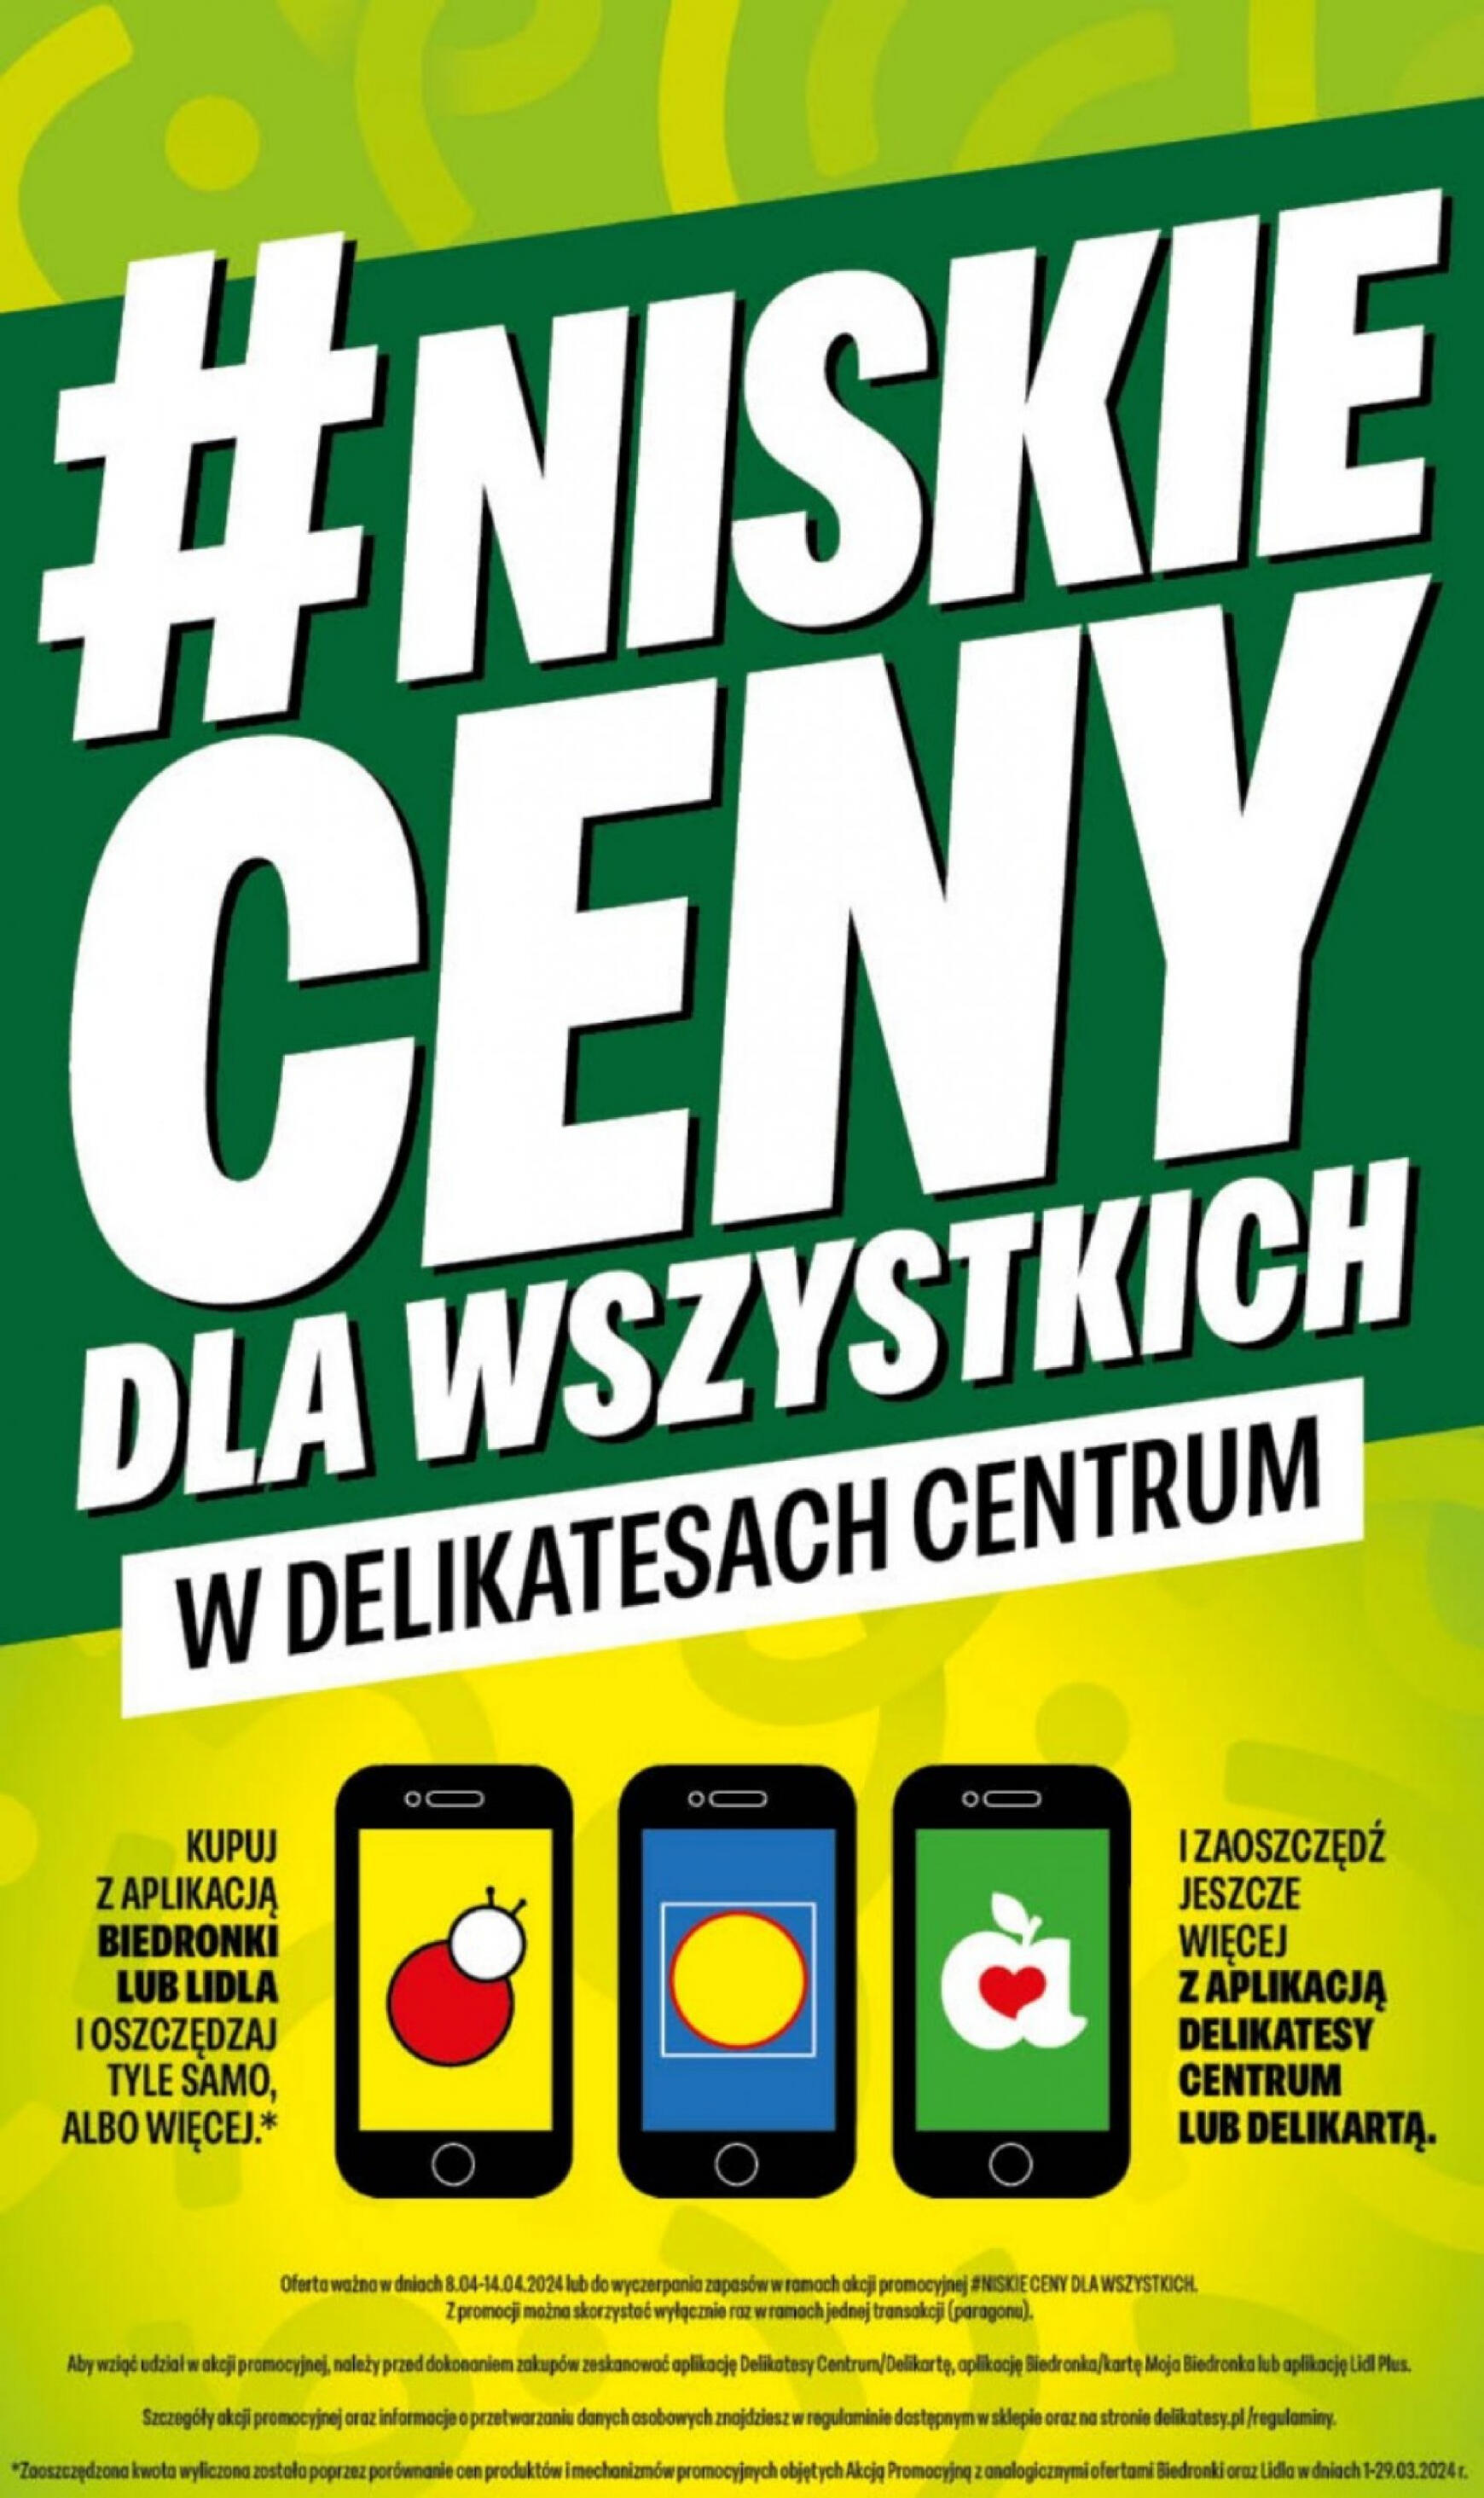 delikatesy-centrum - Delikatesy Centrum gazetka aktualna ważna od 08.04. - 14.04.